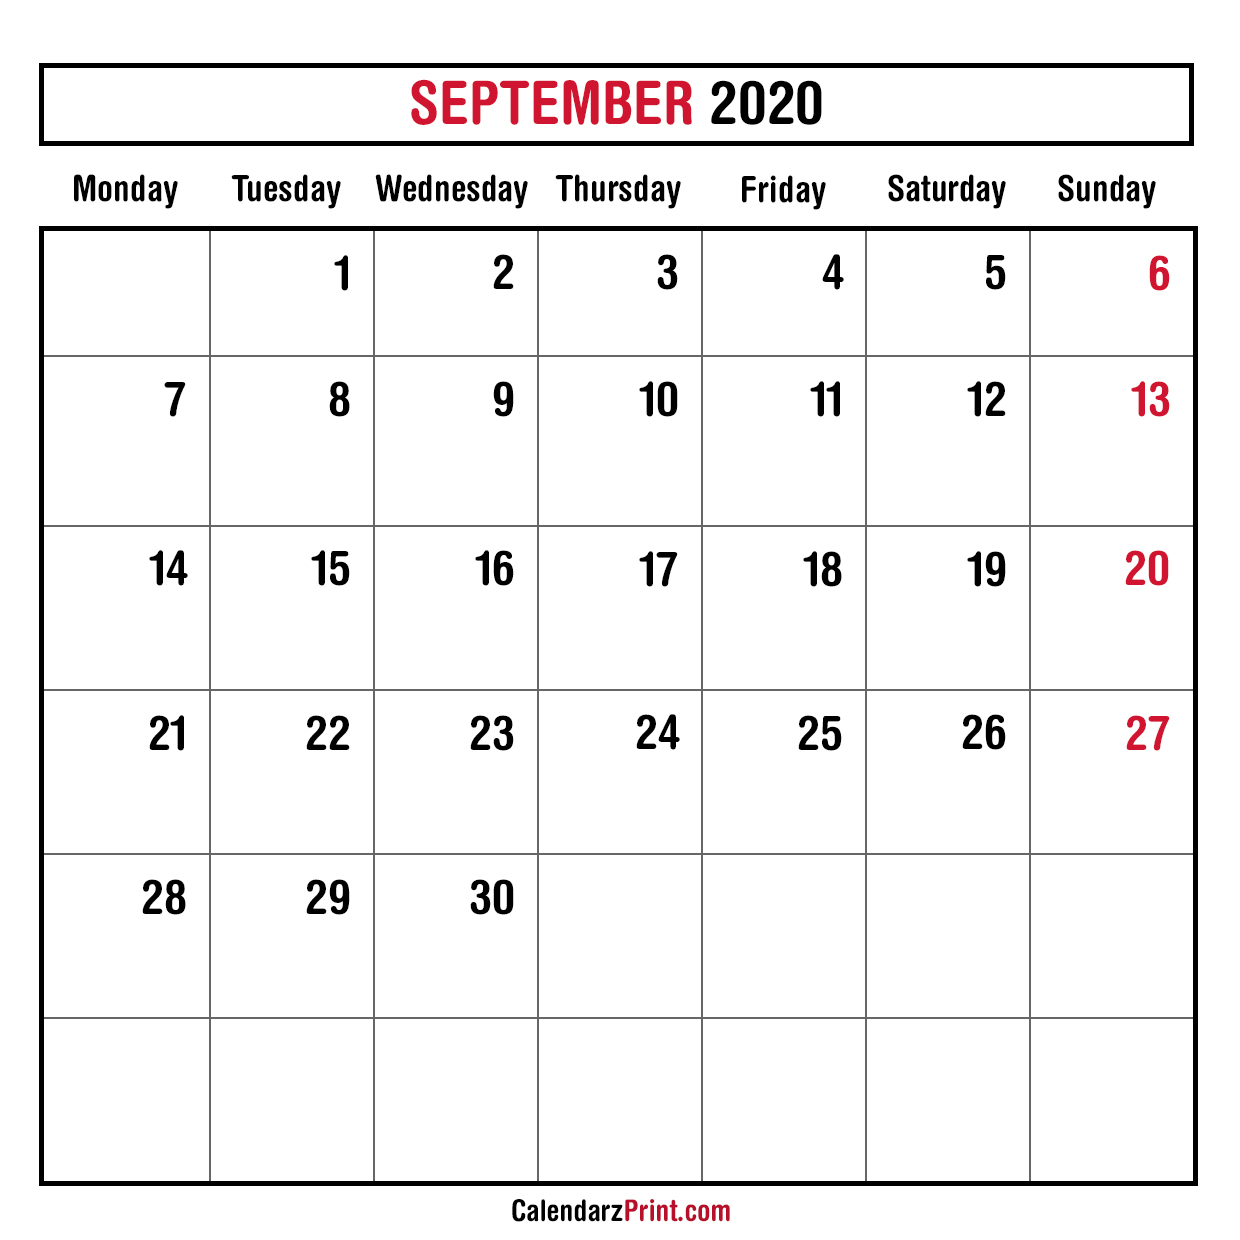 September 2020 Monthly Planner Calendar – Printable Free – Monday Start – CalendarzPrint | Free ...